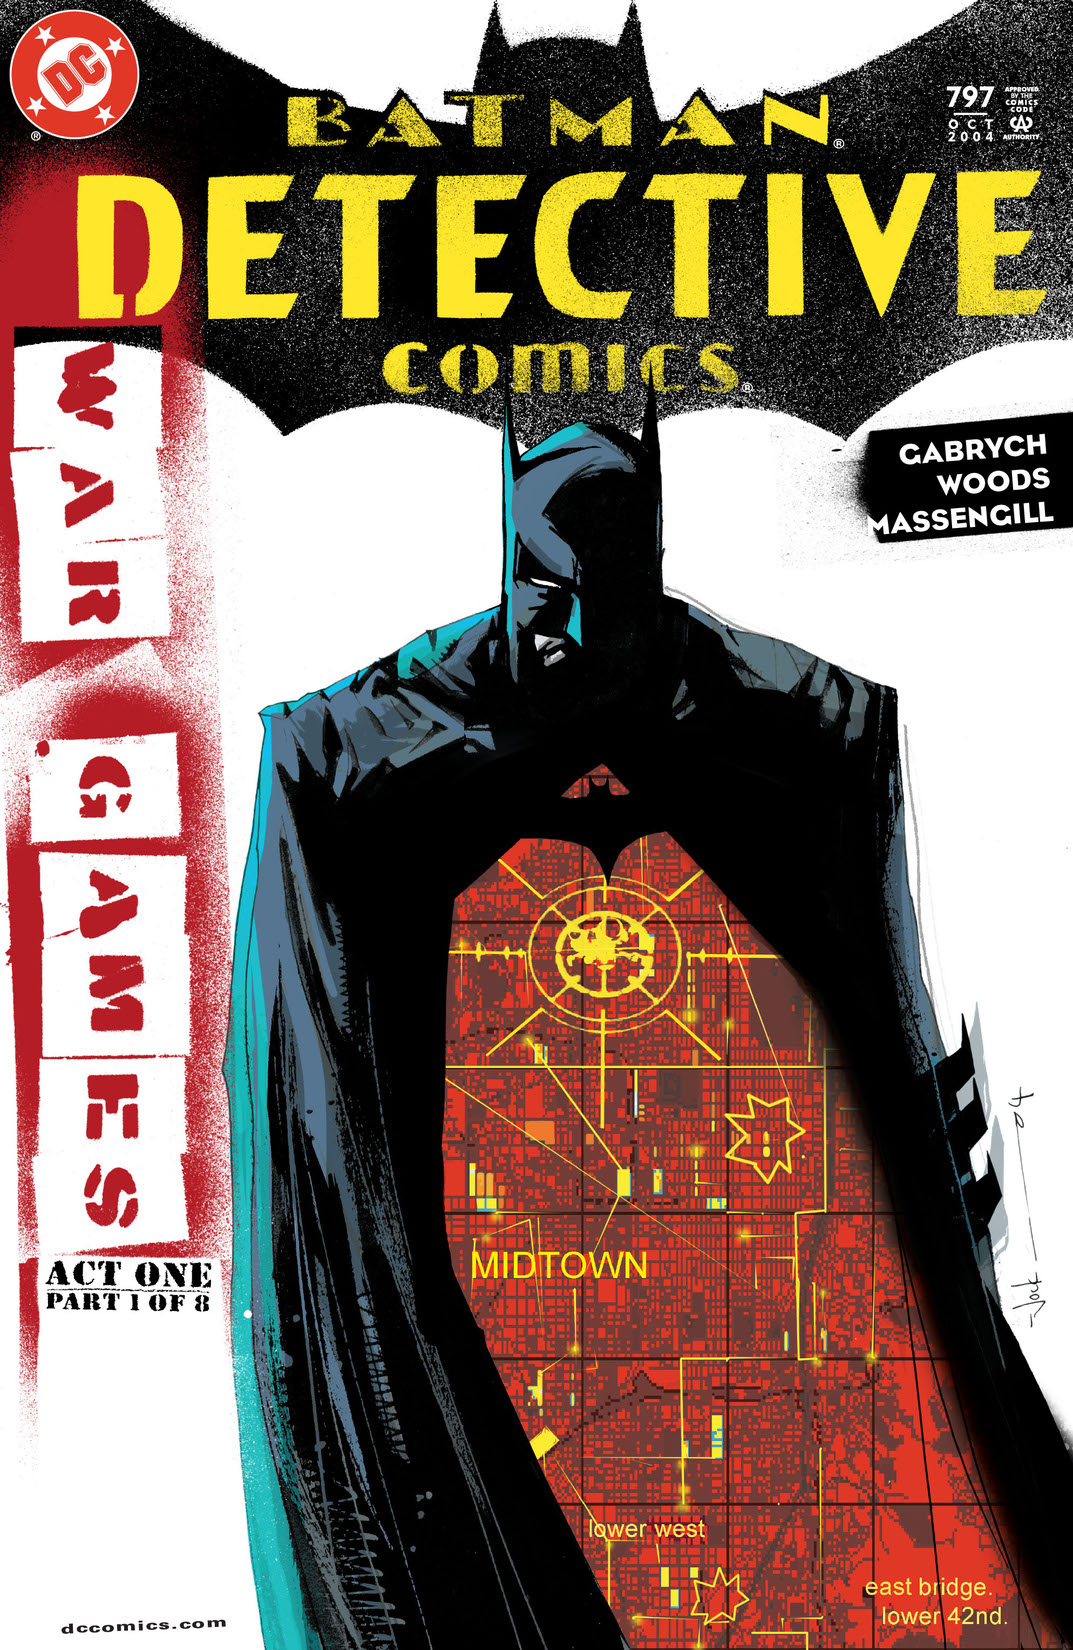 Detective Comics (1937-) #797 preview images